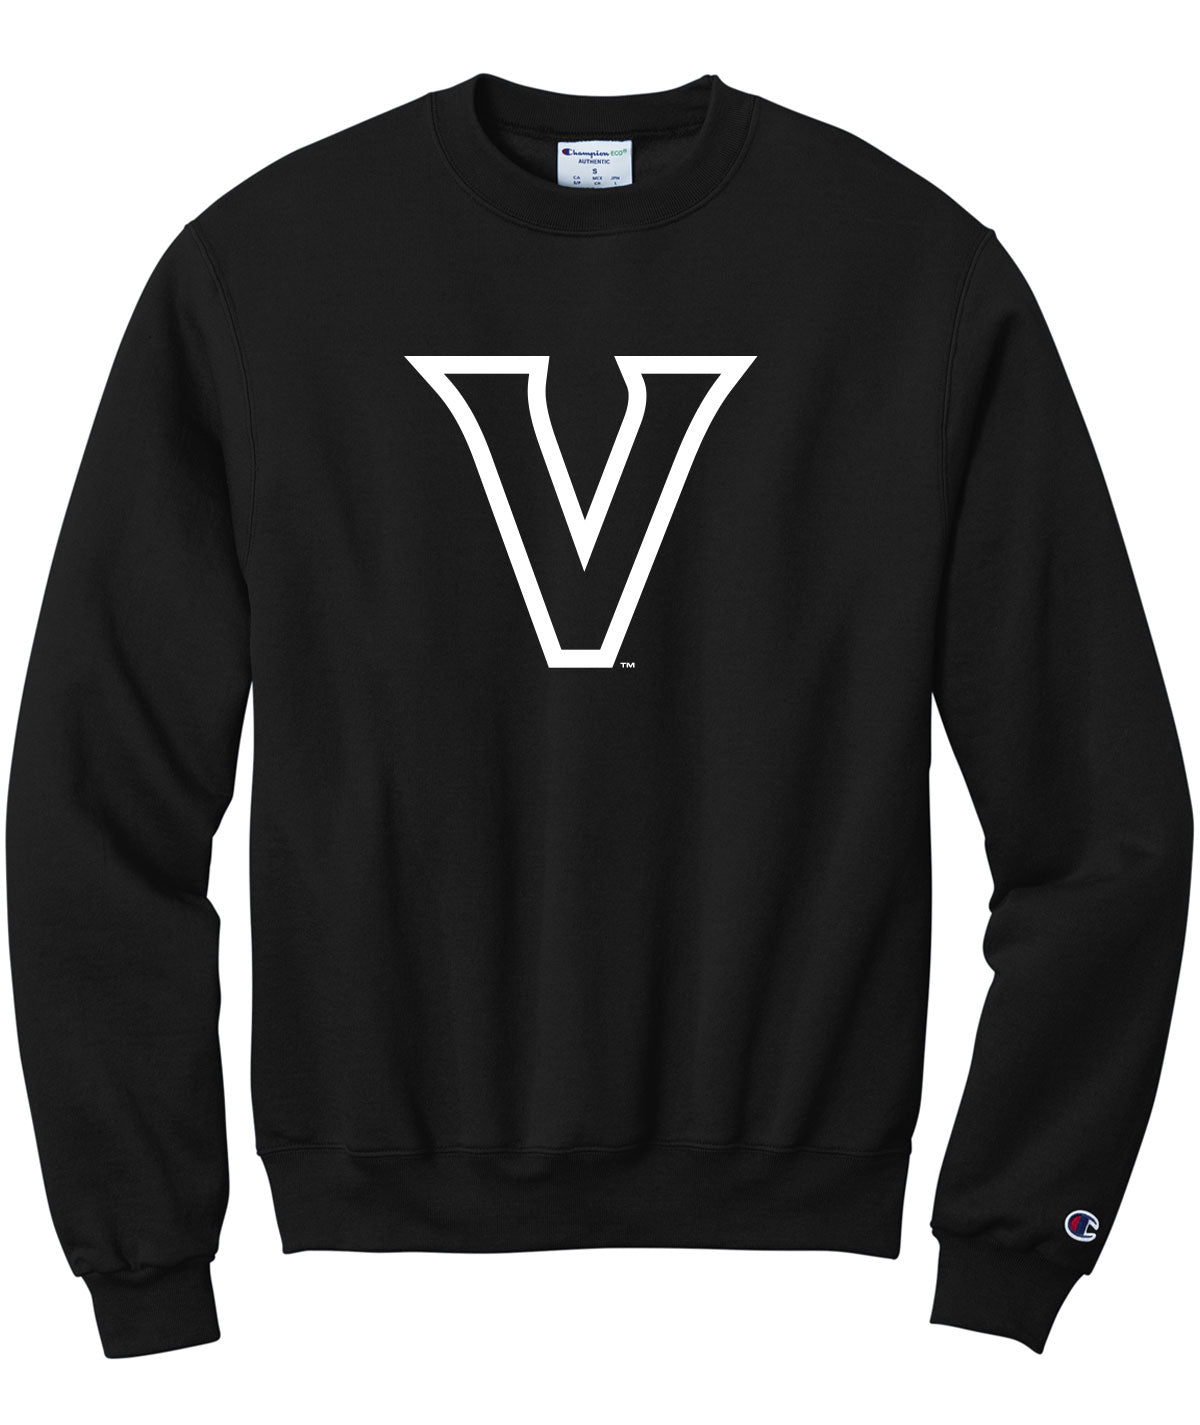 Valley V Champion Crewneck Sweatshirt